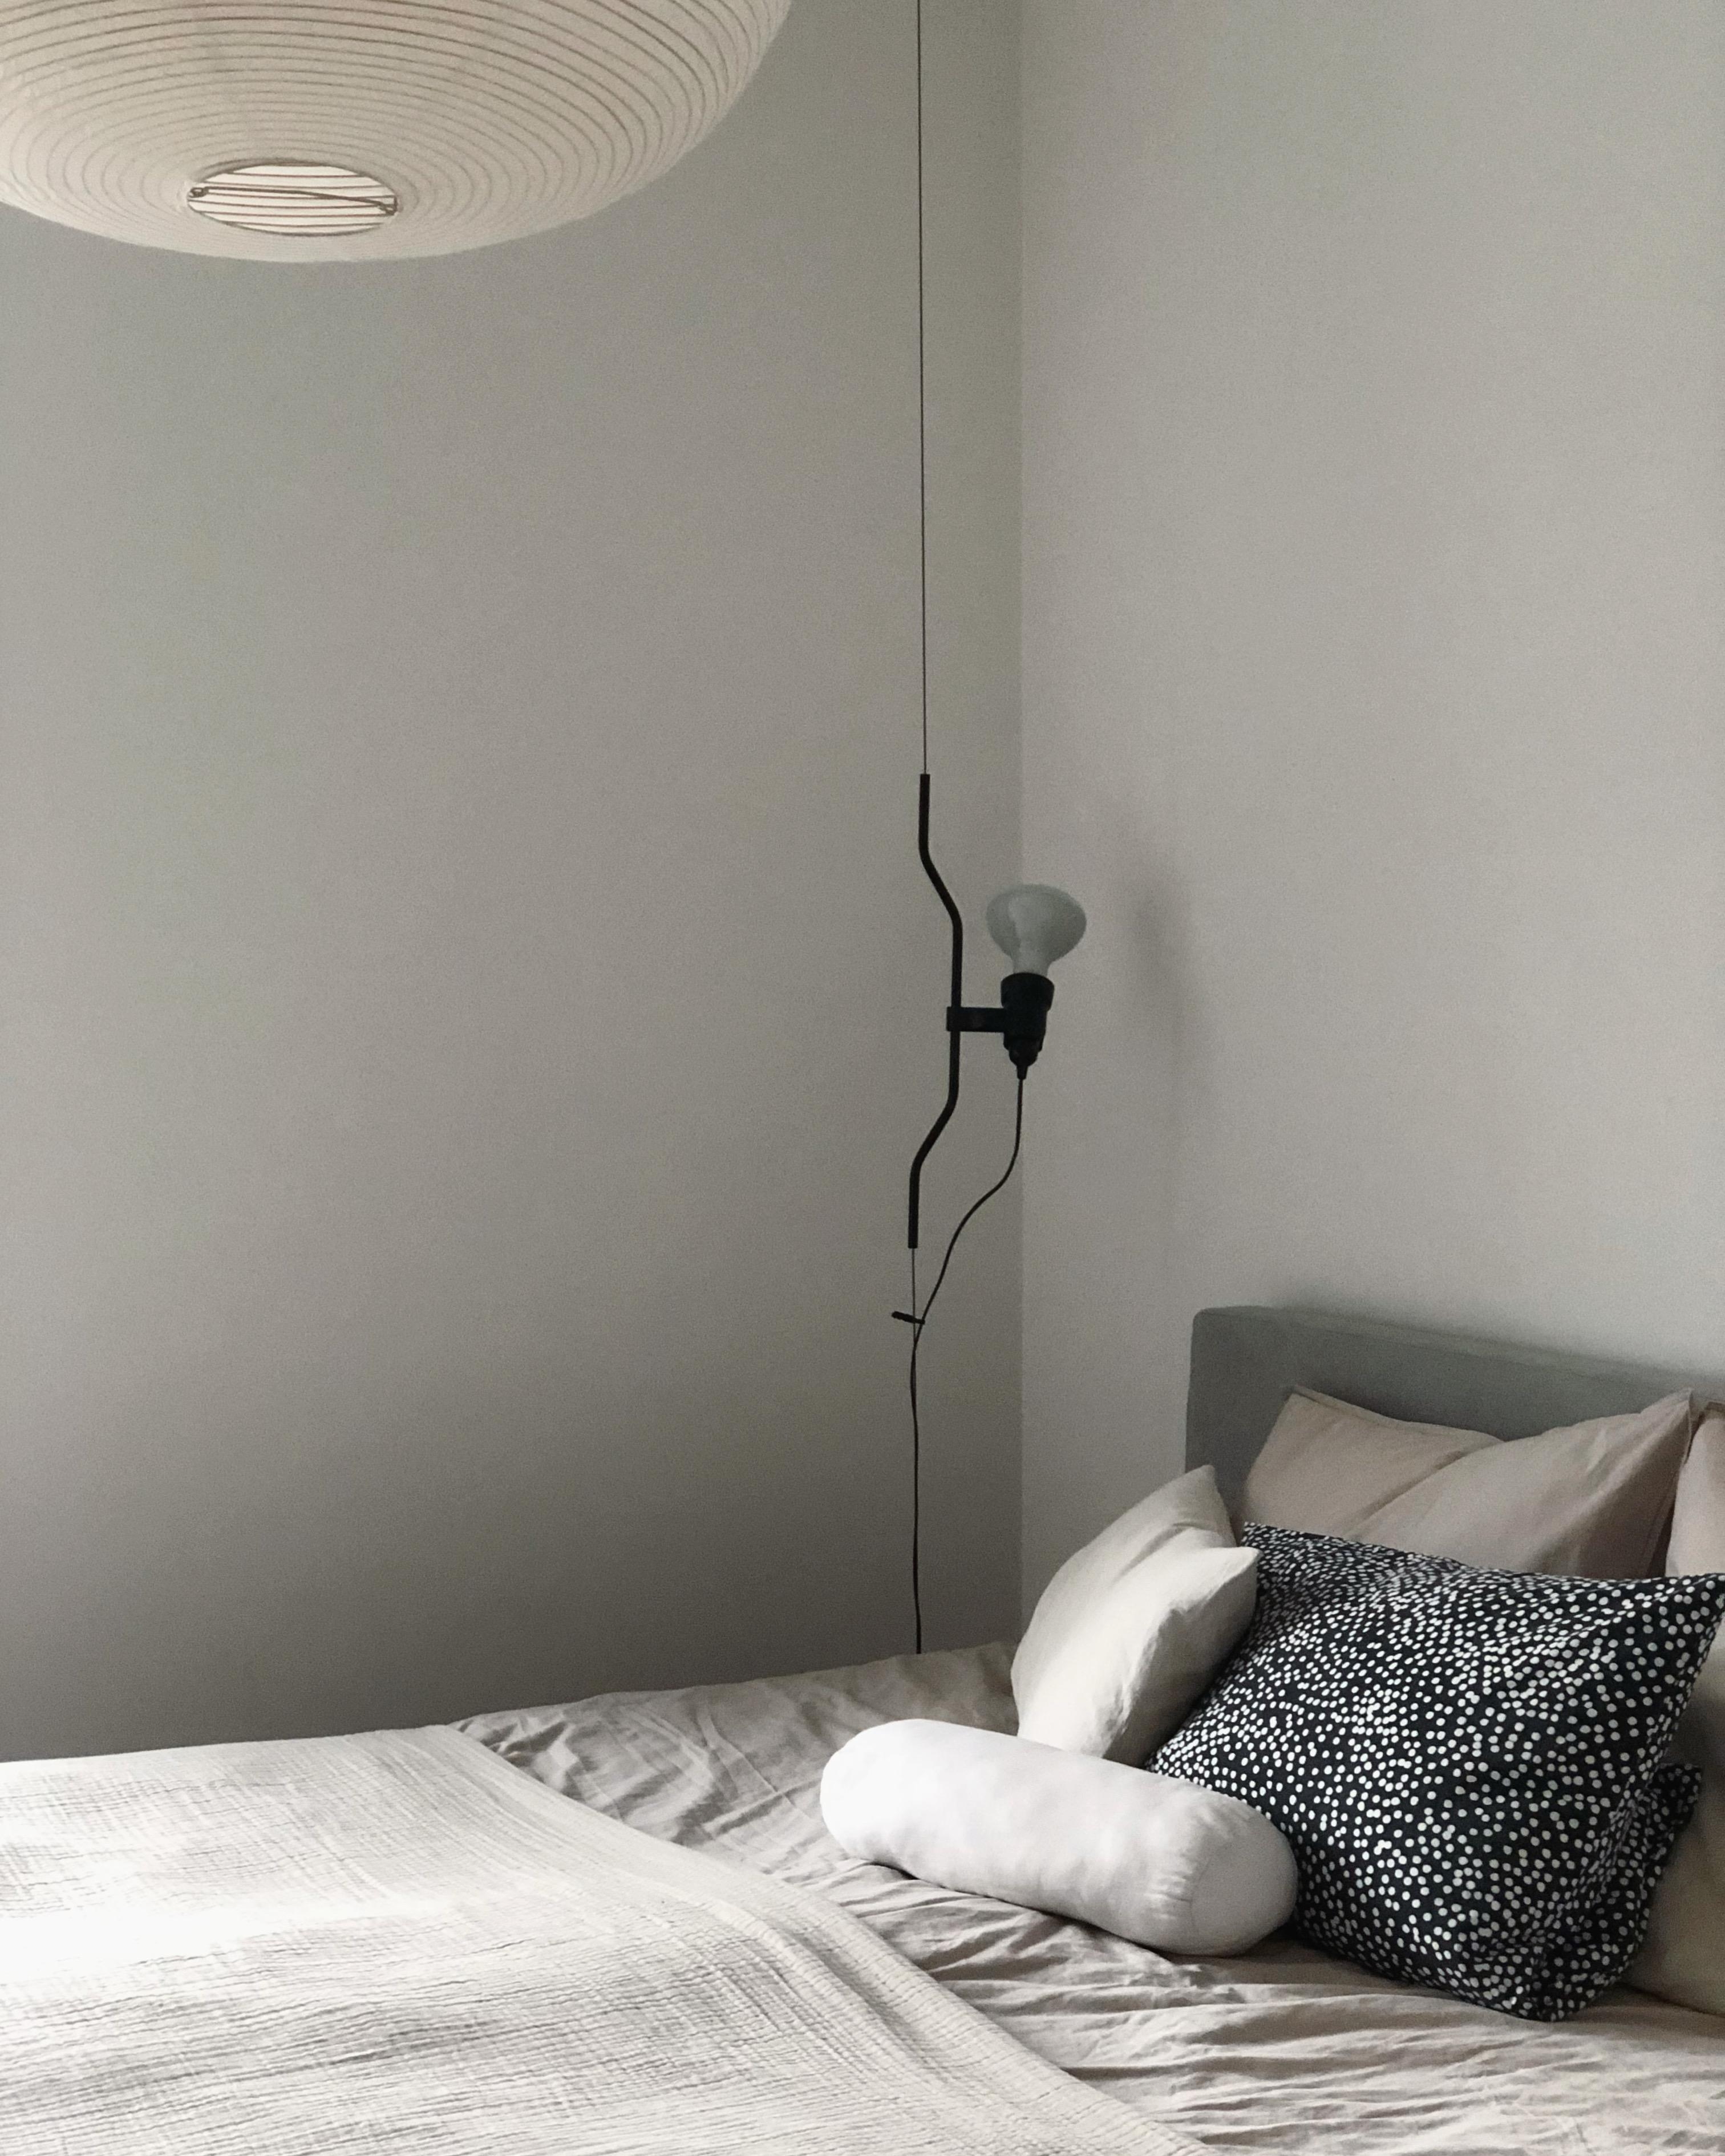 #bedroom #schlafzimmer #bett #bed #textilien #beleuchtung #lampe #minimalism #interior #couchstyle #cozy #home #nordic